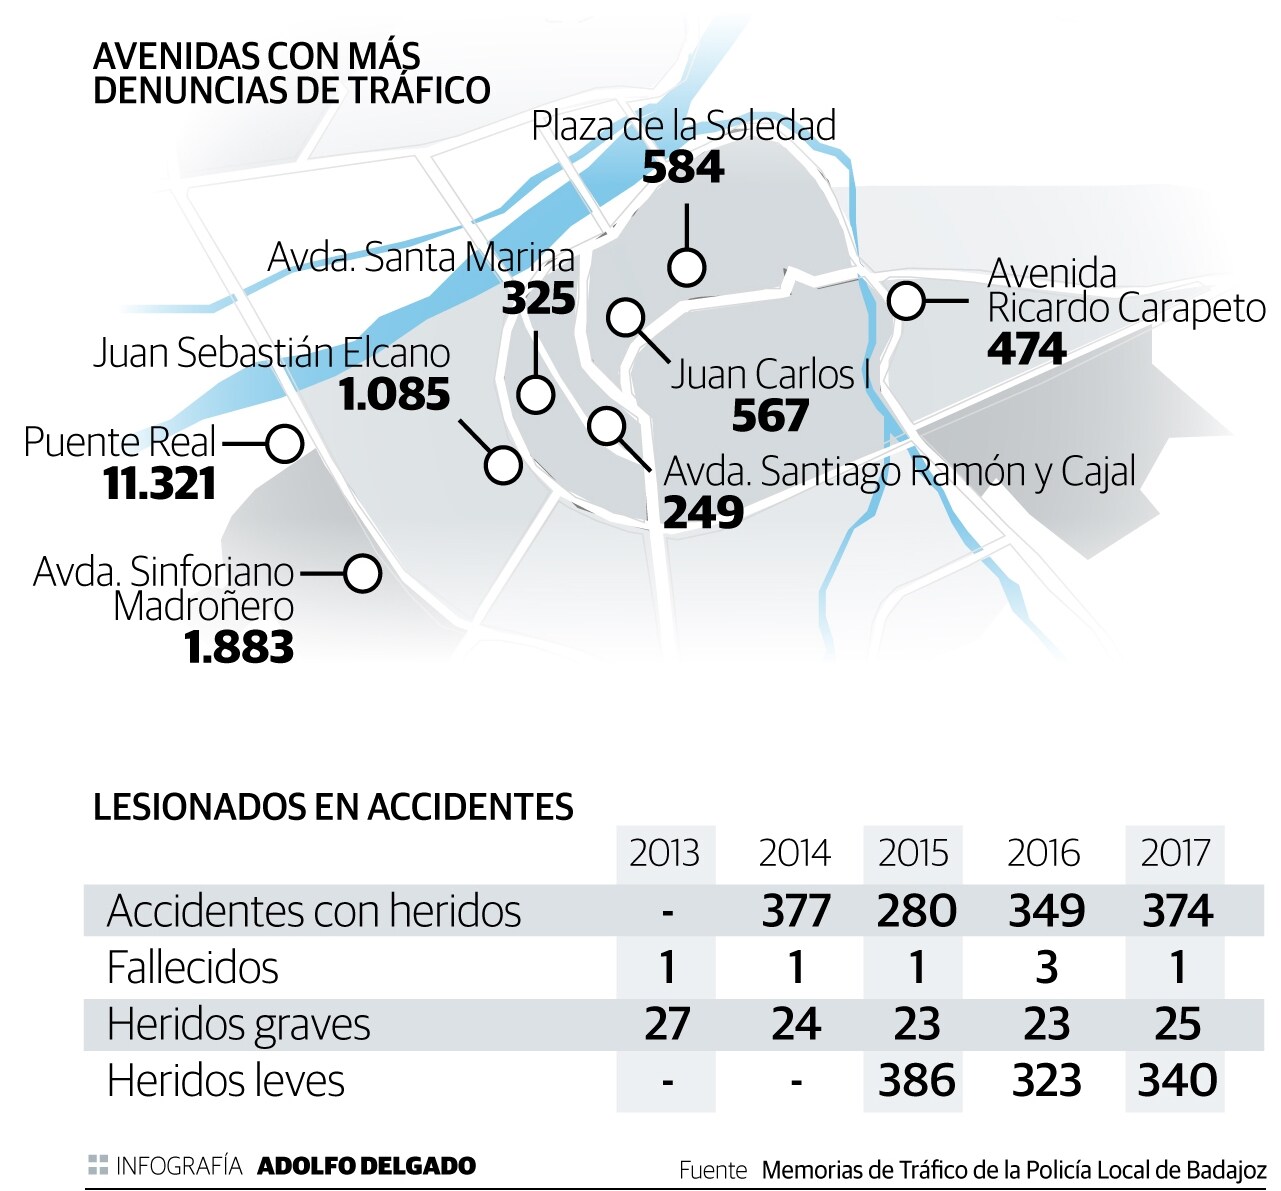 Avenidas de Badajoz con más denuncias de tráfico